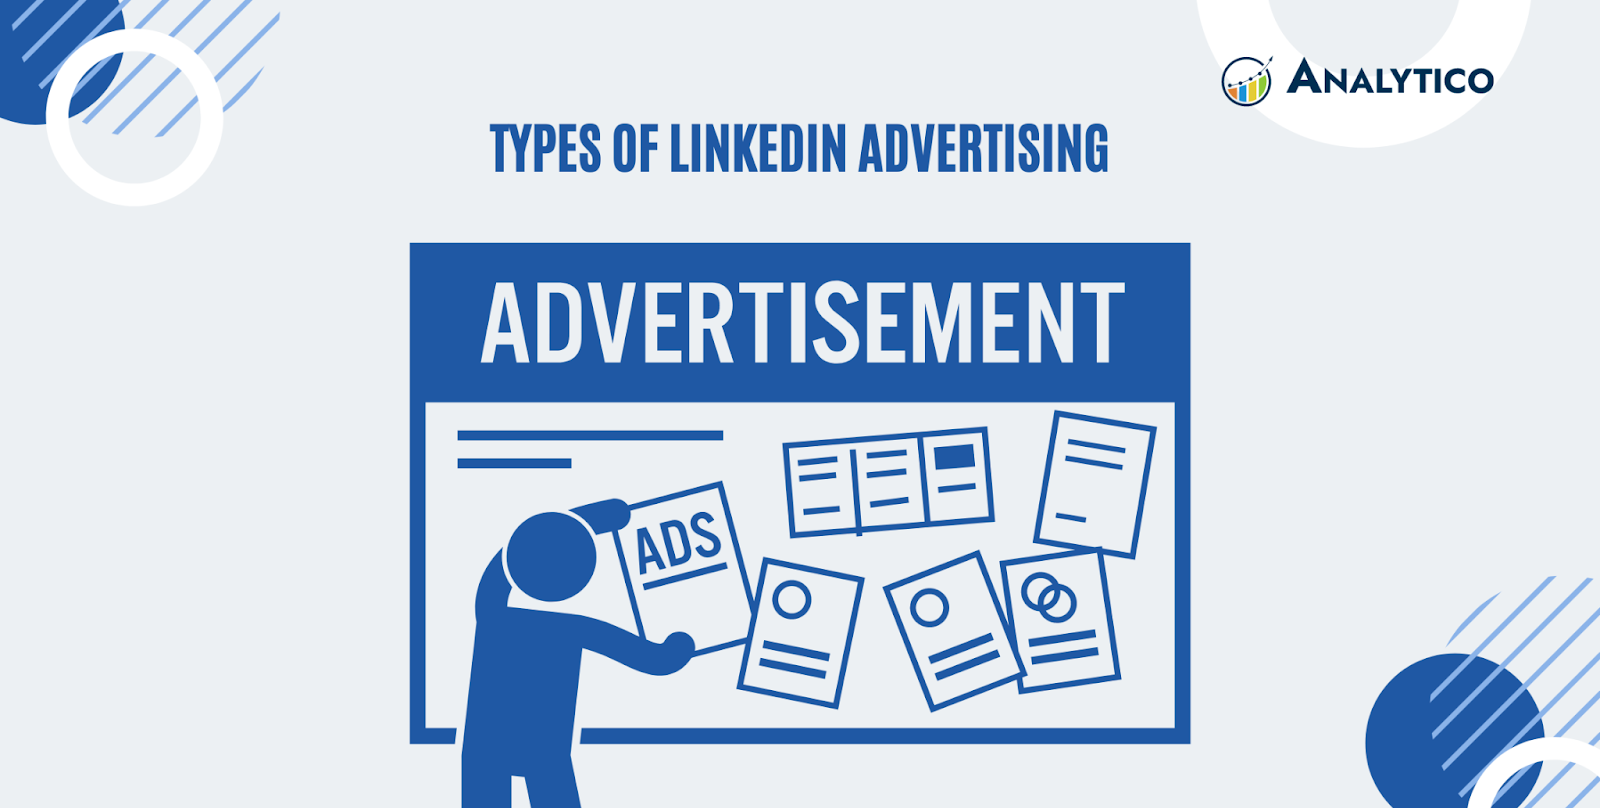 Types of LinkedIn Advertising